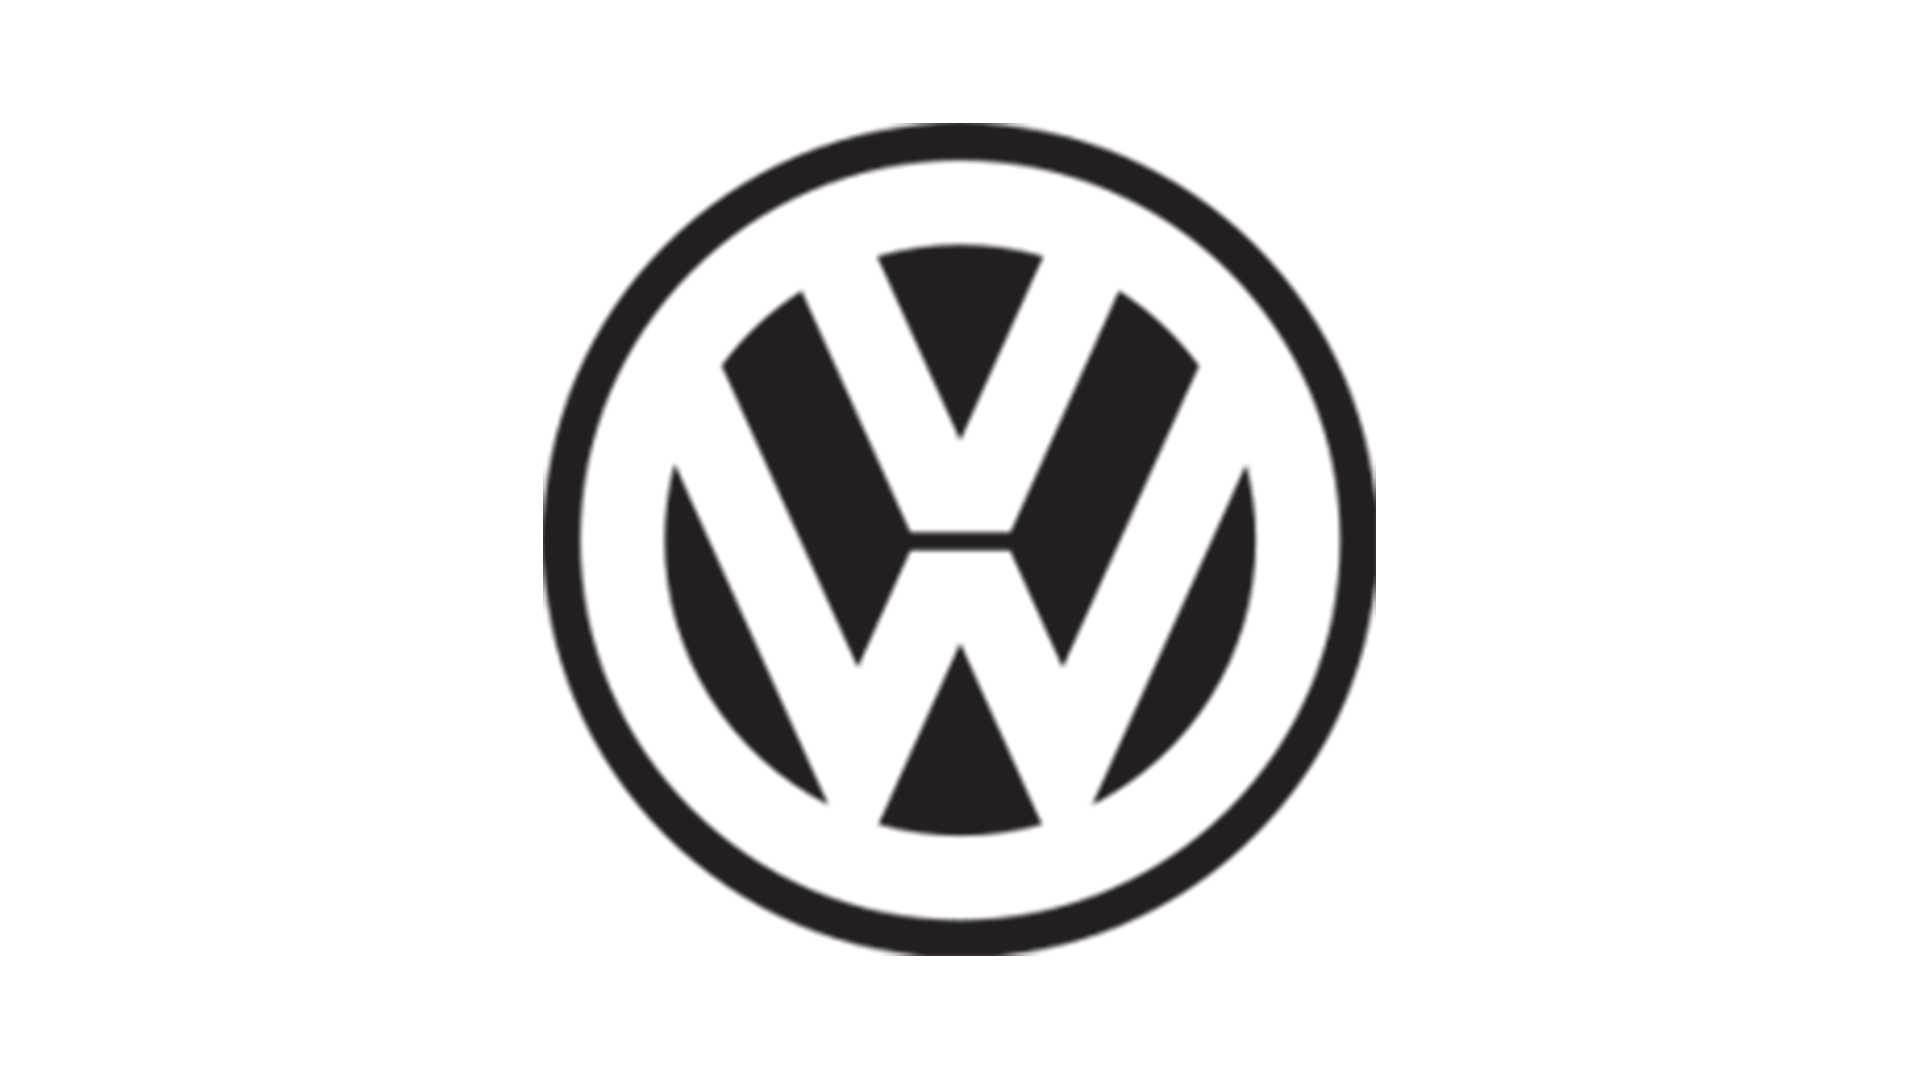 VW - VW